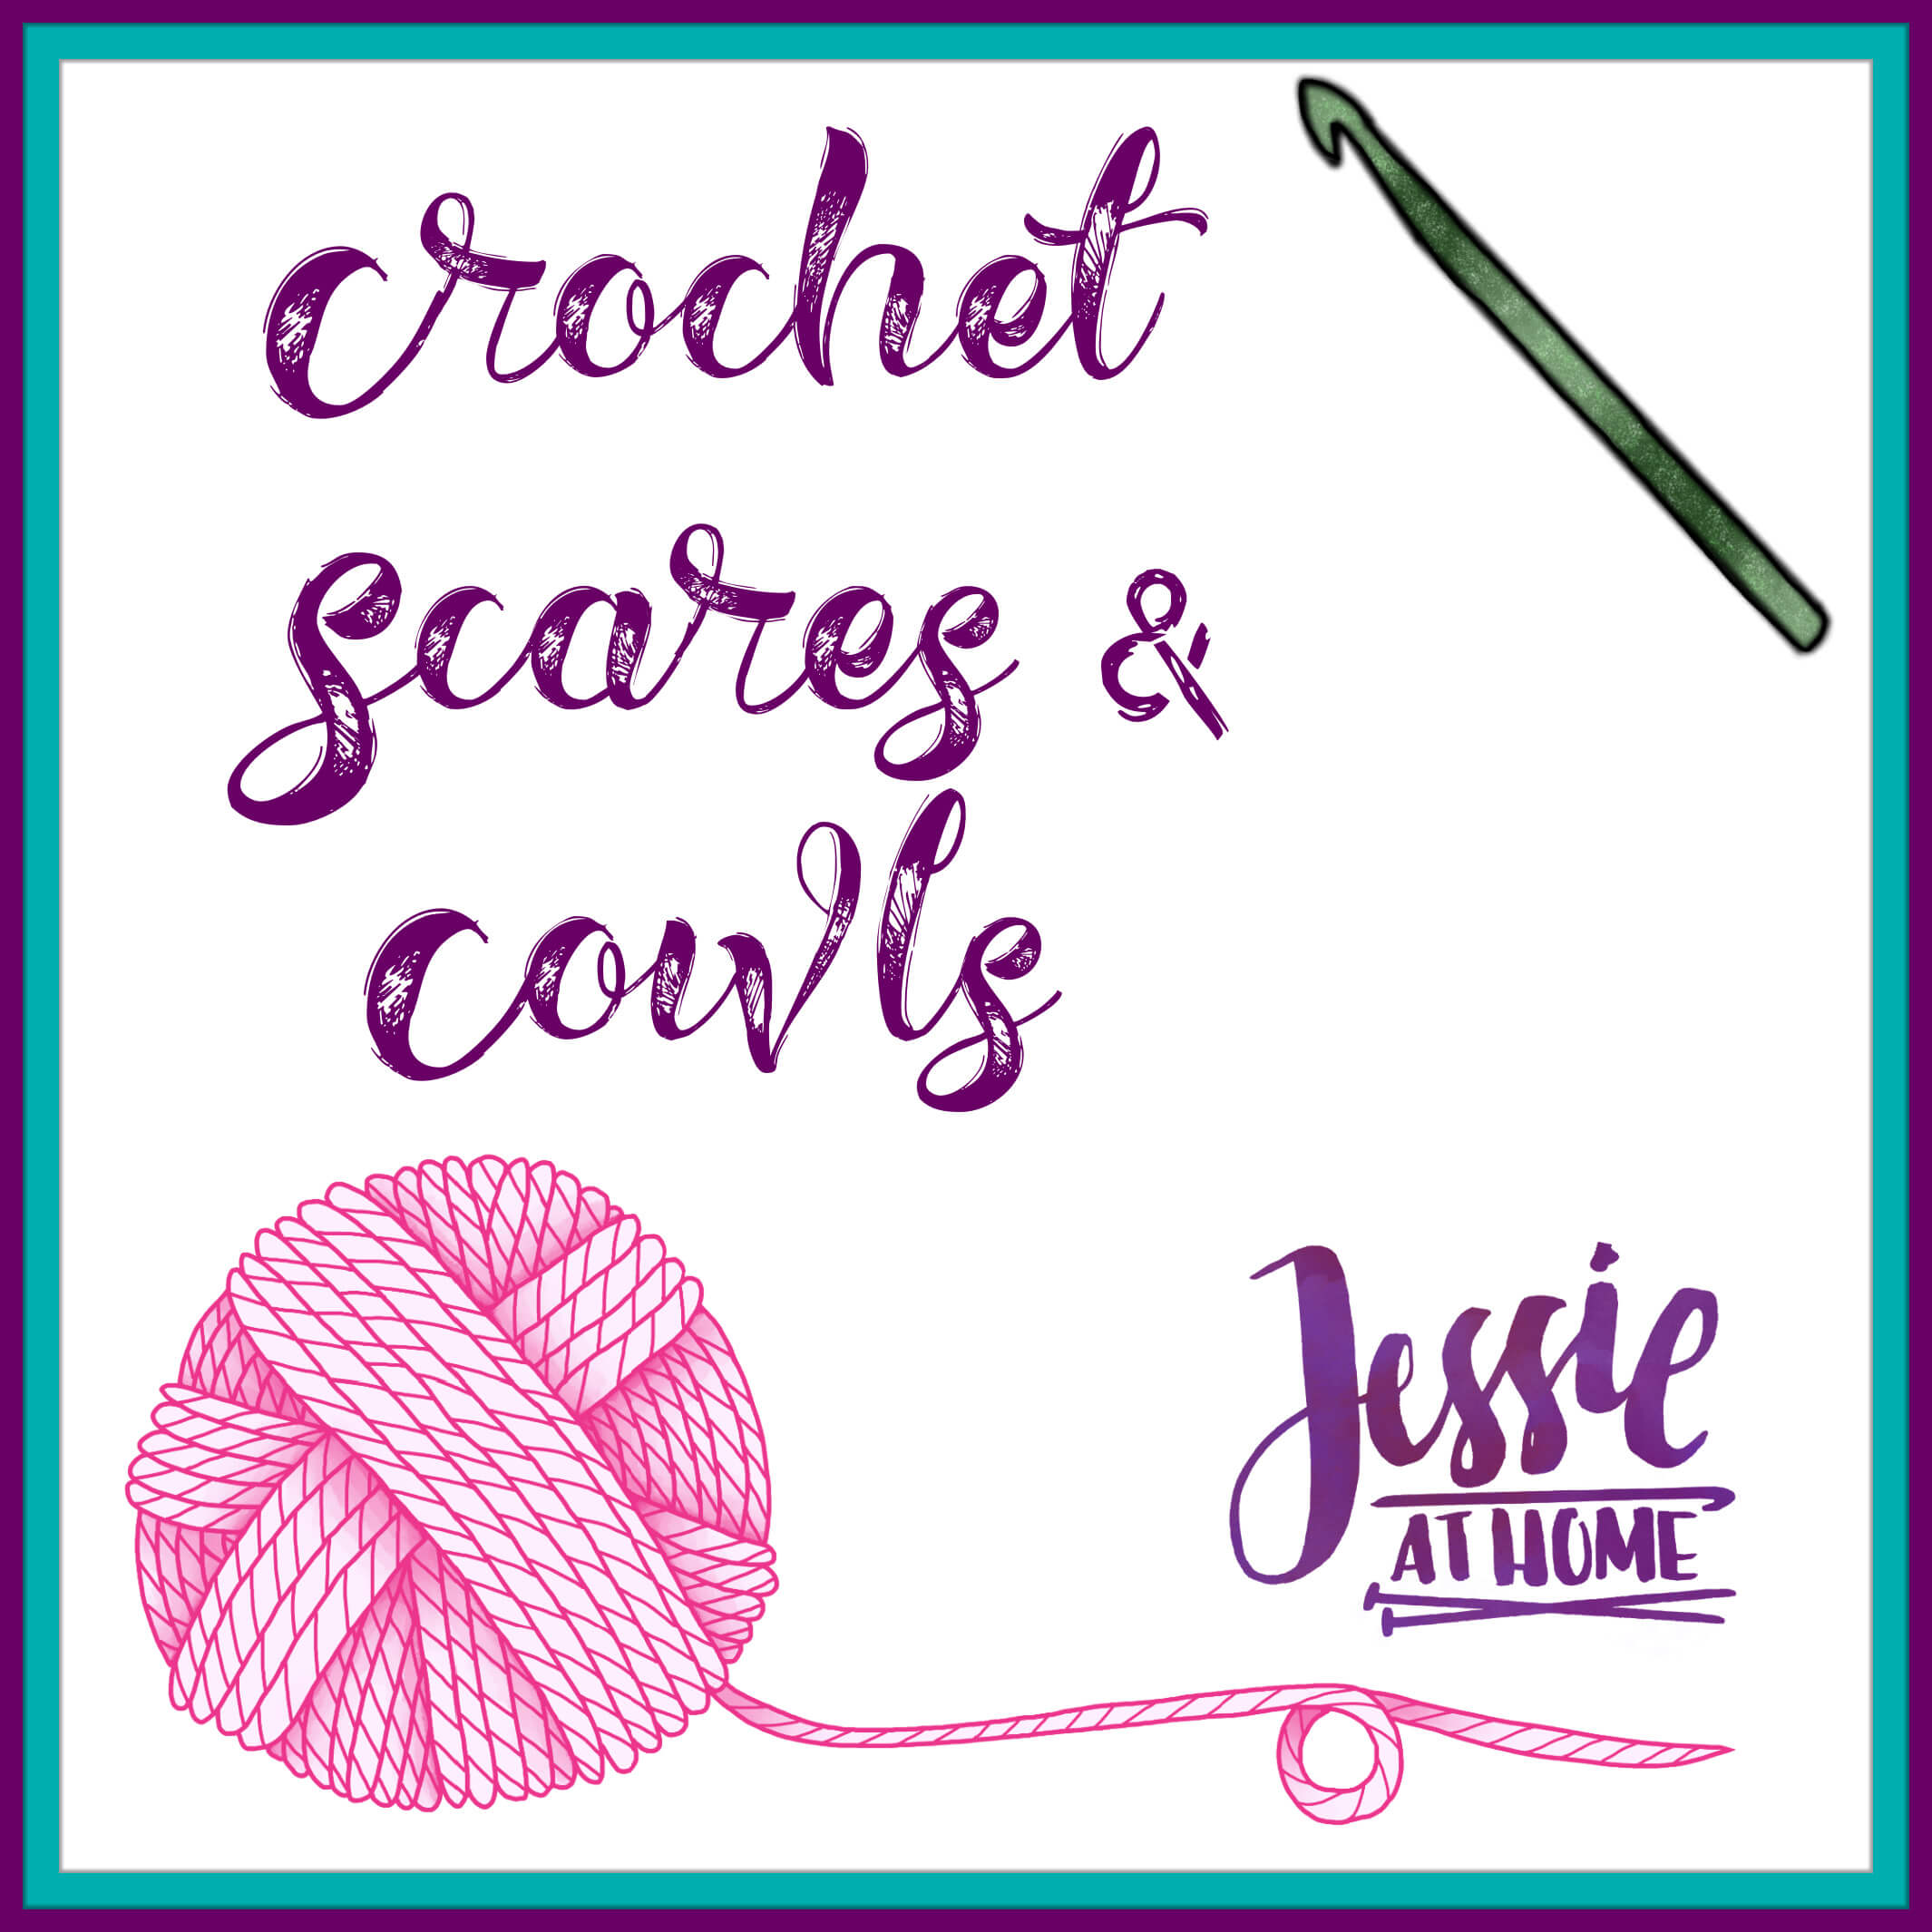 Crochet Scarves & Cowls Menu on Jessie At Home